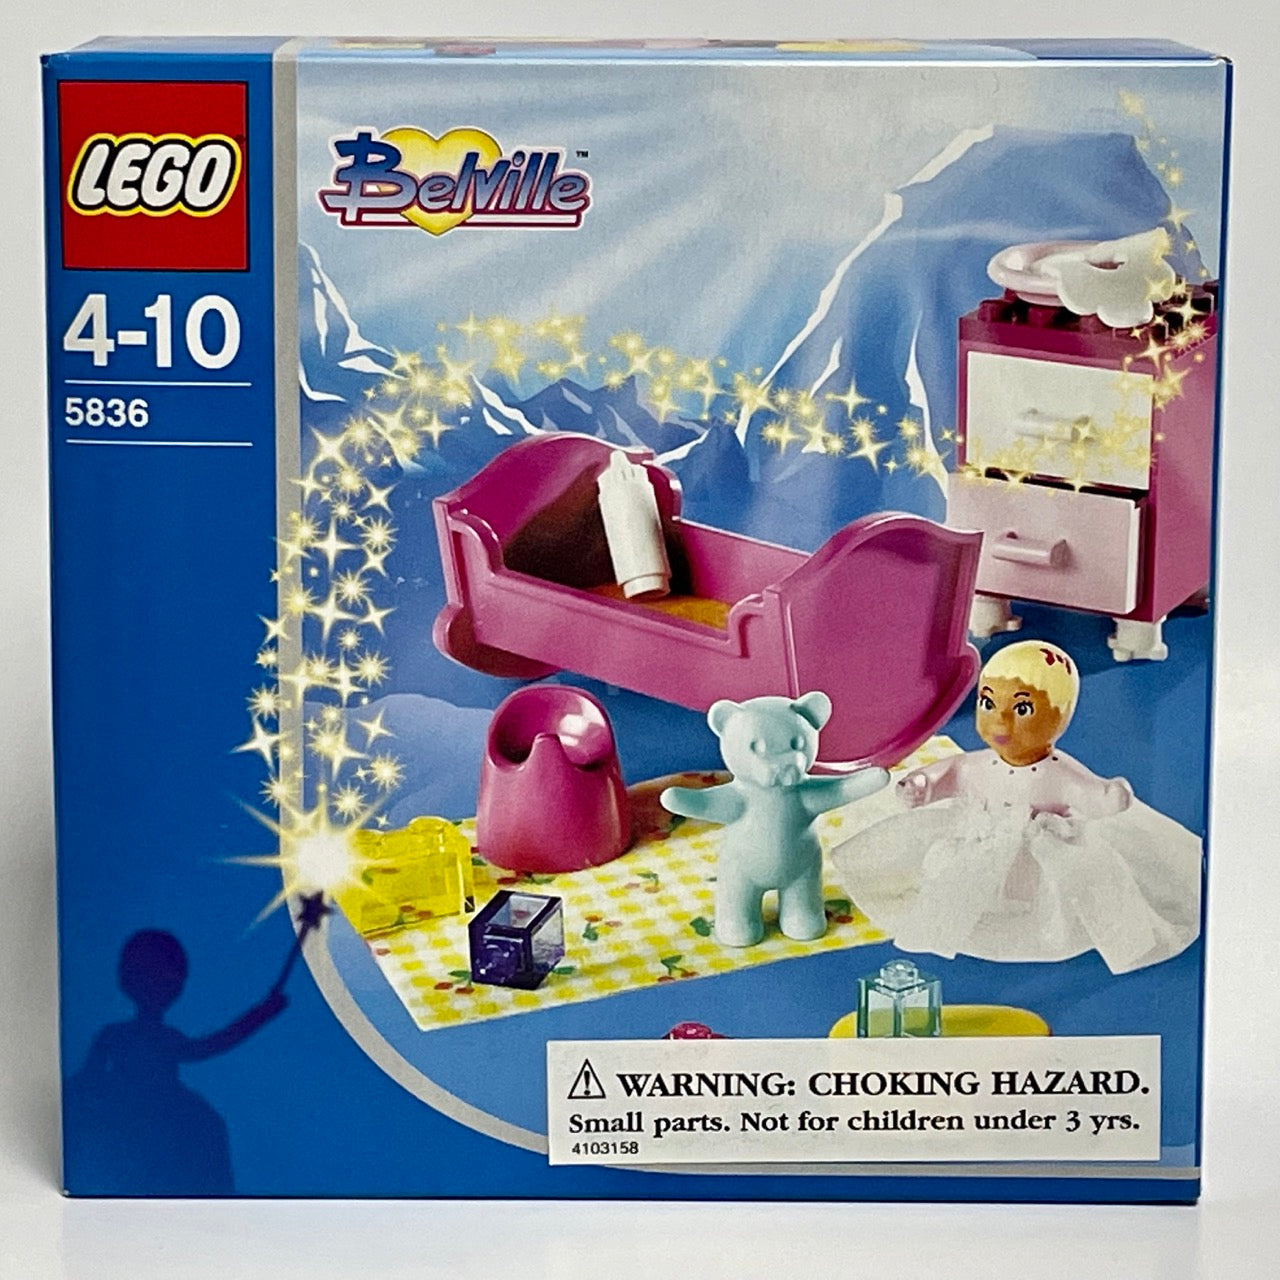 Belville Beautiful Baby Princess LEGO 5836 [Retired] NIB 2002 – and Huntsville